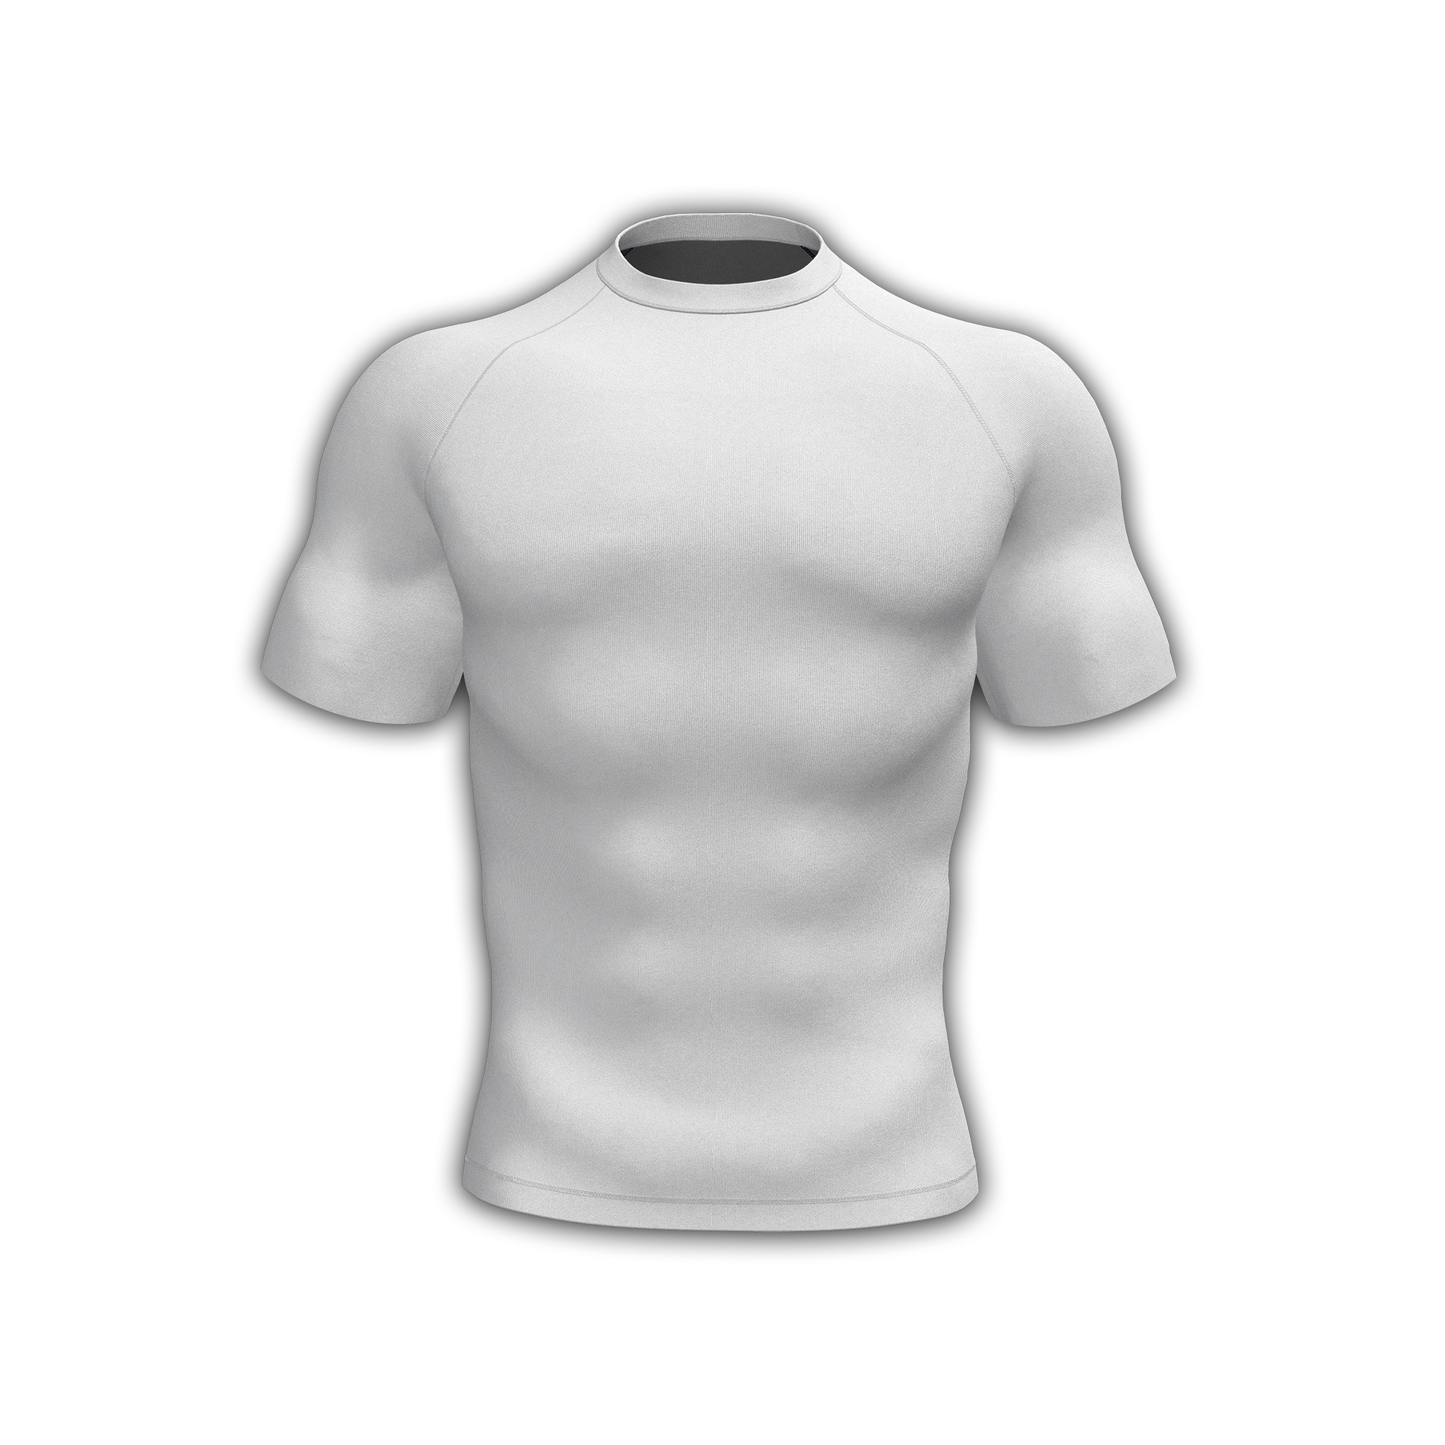 "CRUCIFIER" Black Compression Shirt(Short-sleeves)